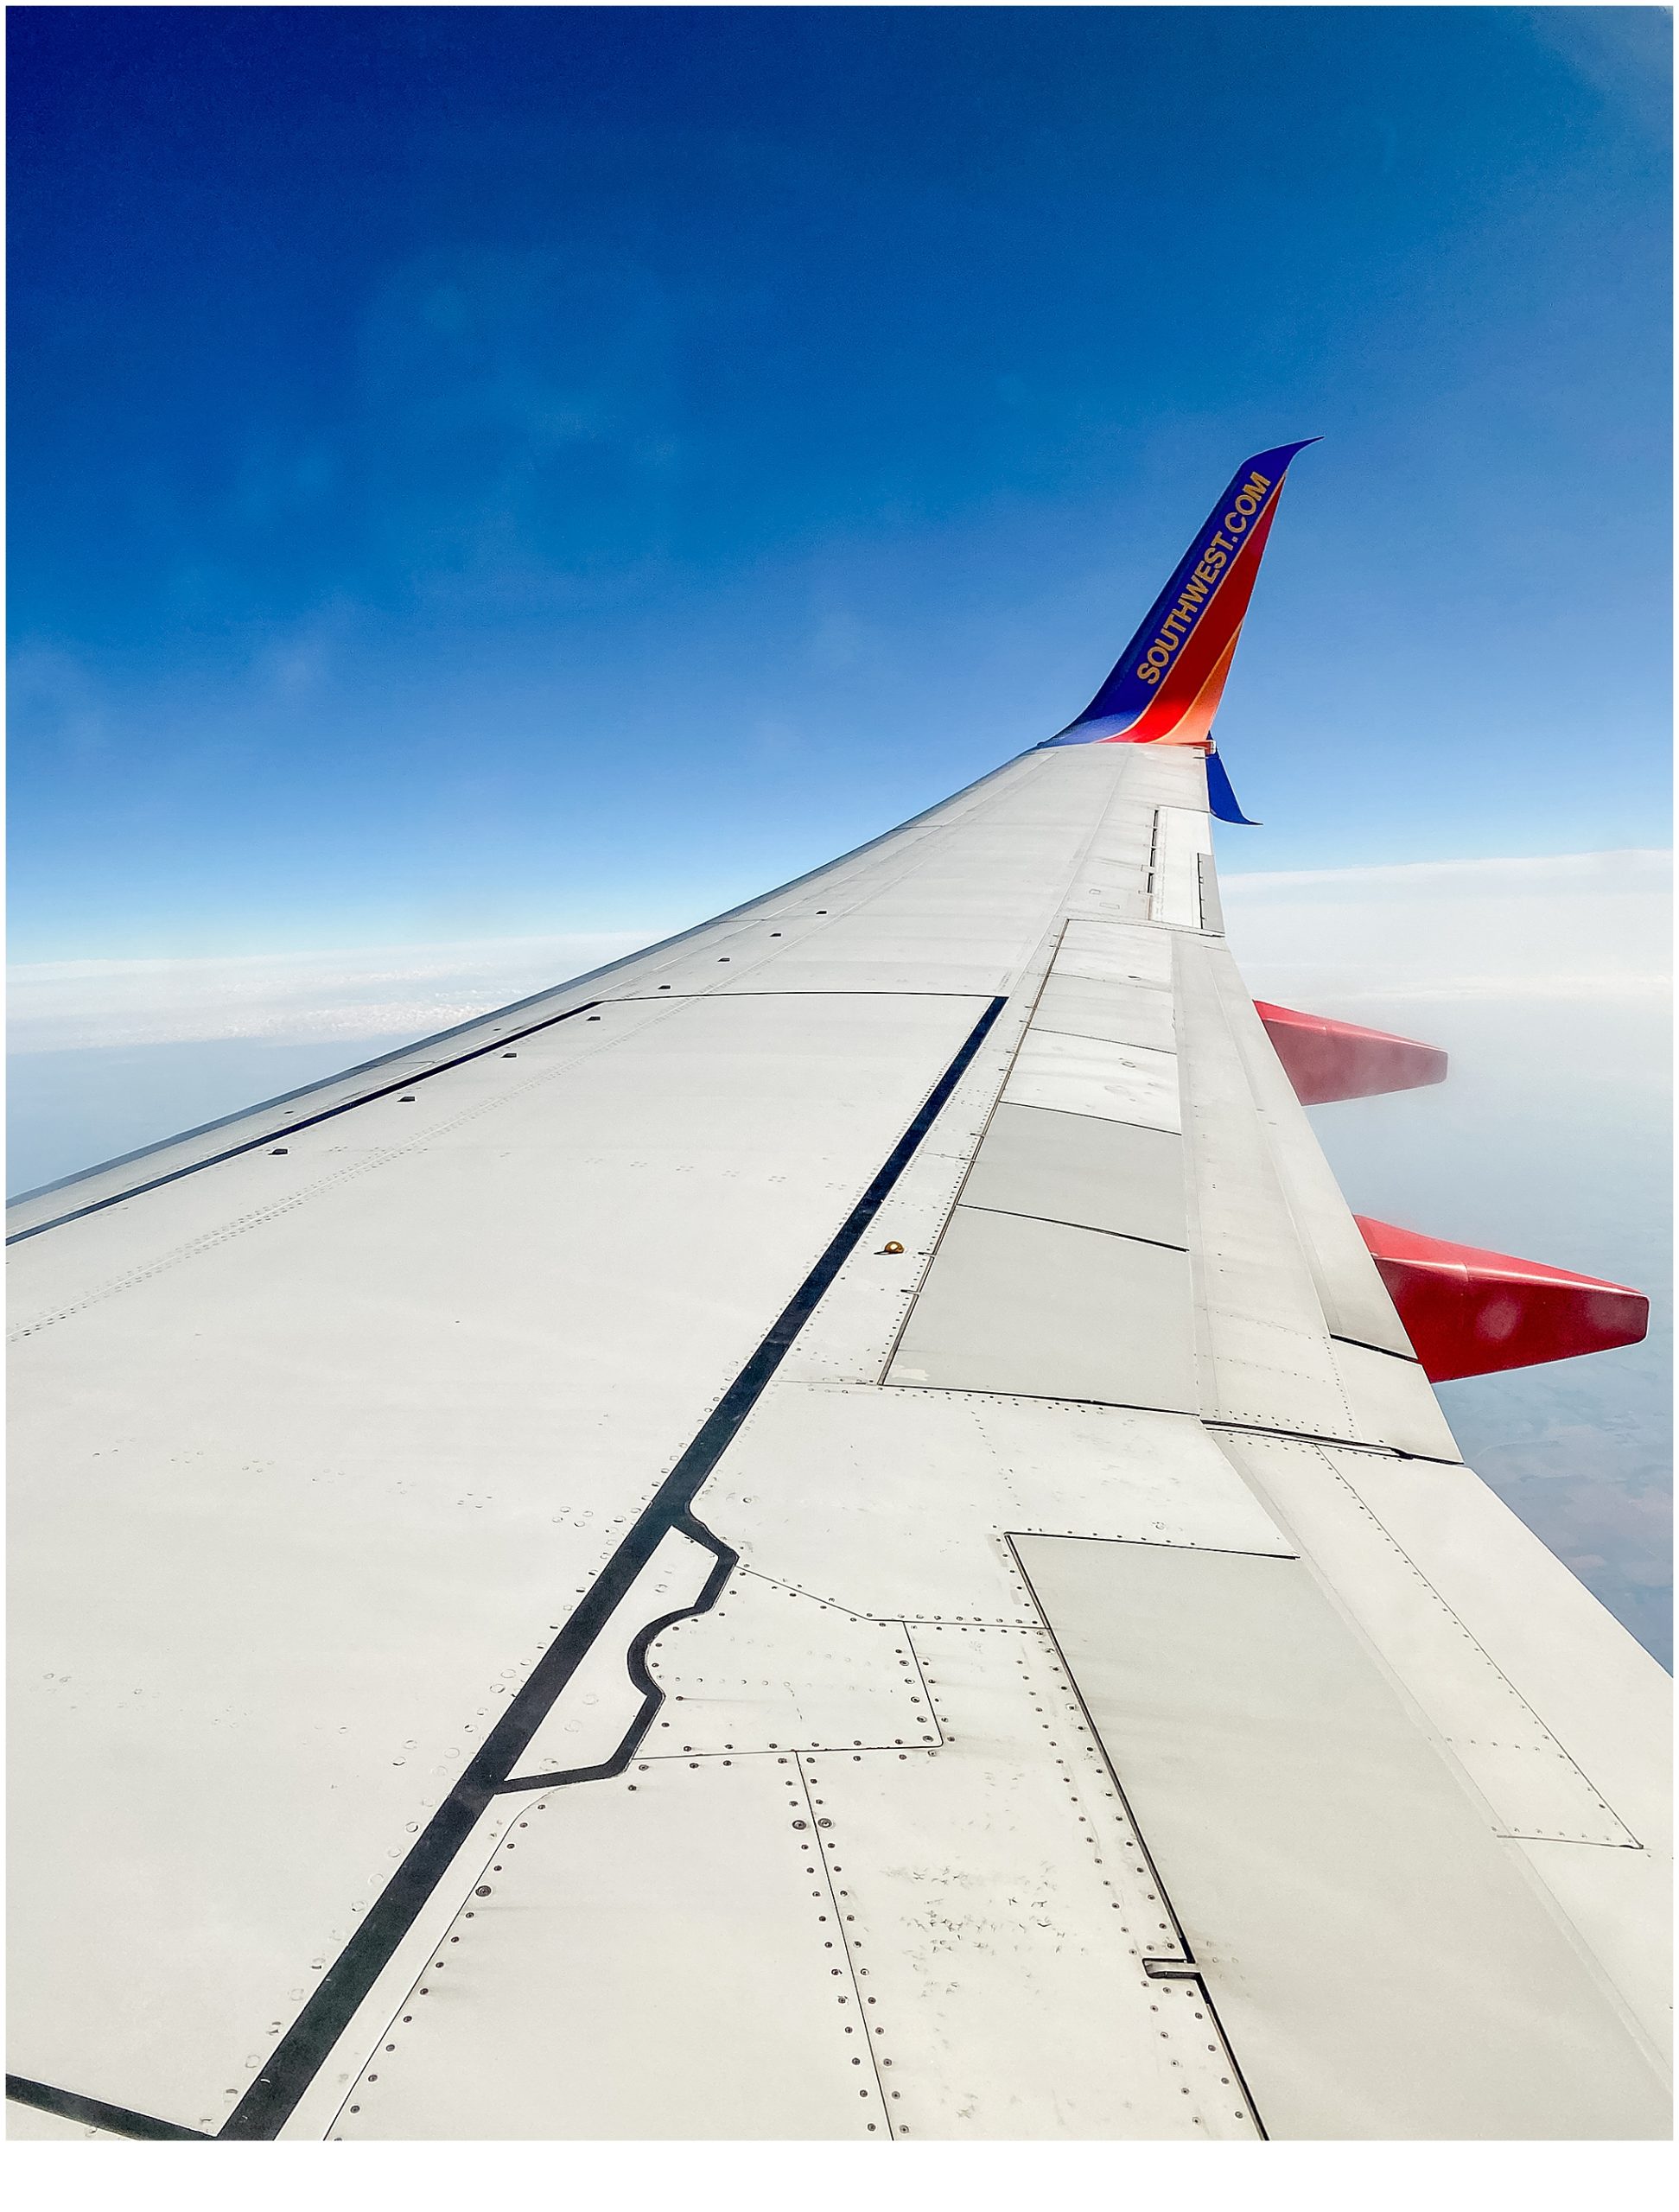 Safety Tips for Spring Break: Southwest Air flying in the sky.